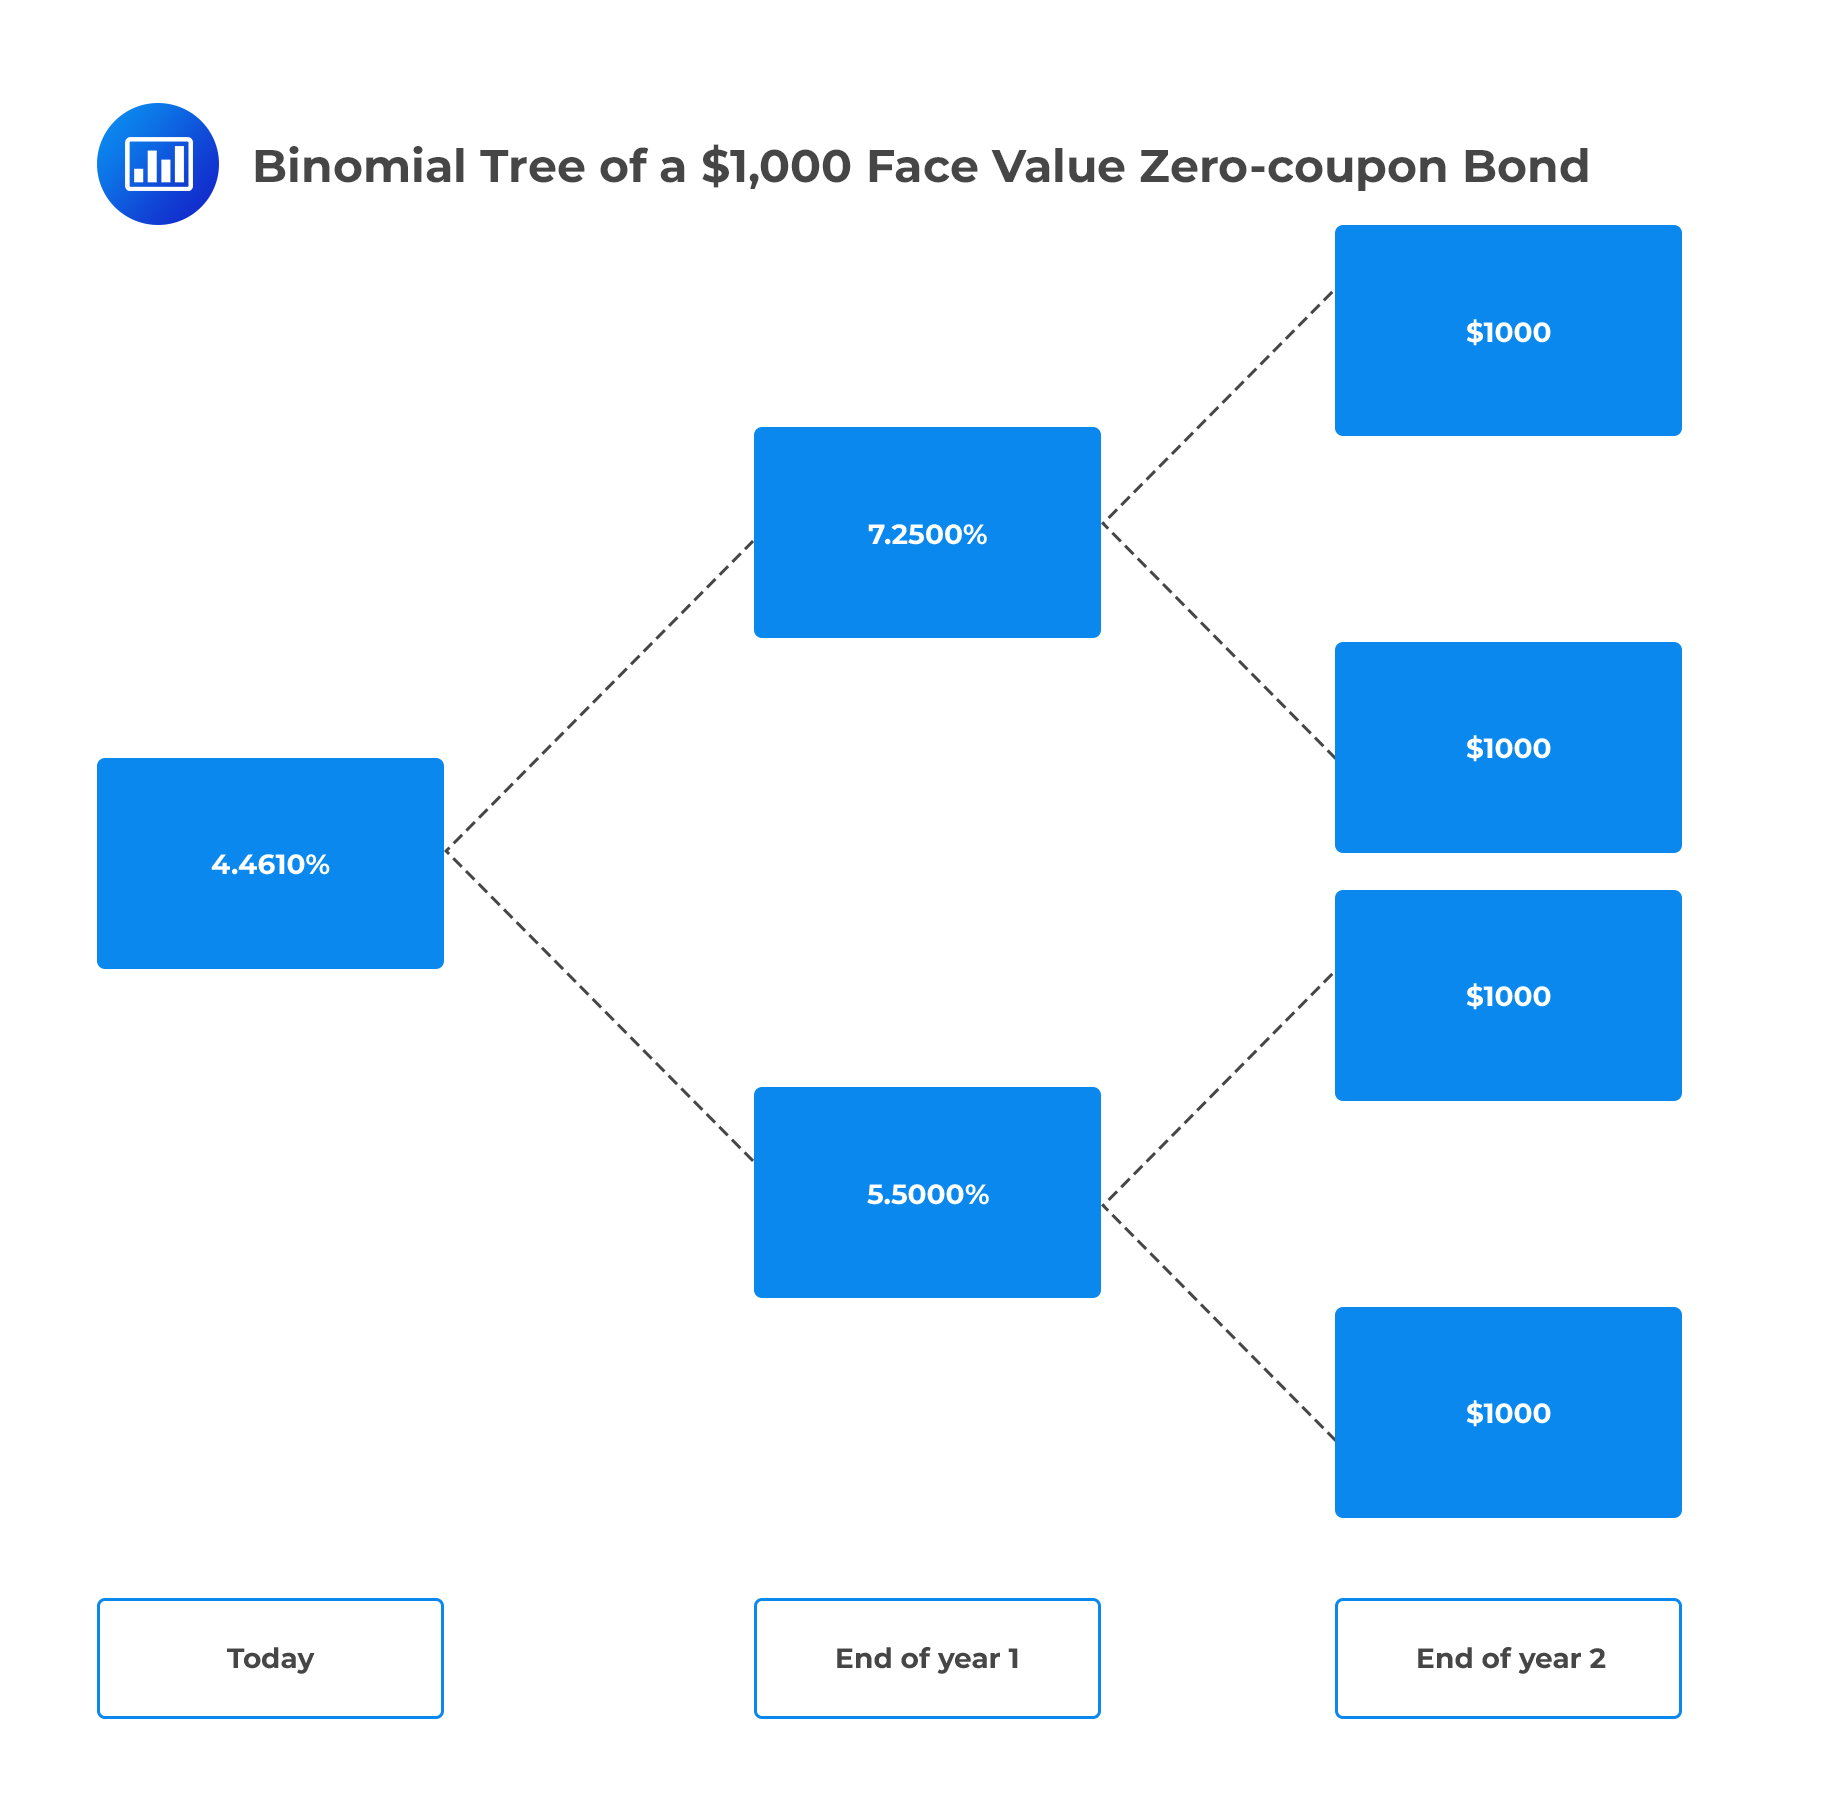 Binomial Tree of a $1,000 Face Value Zero-coupon Bond